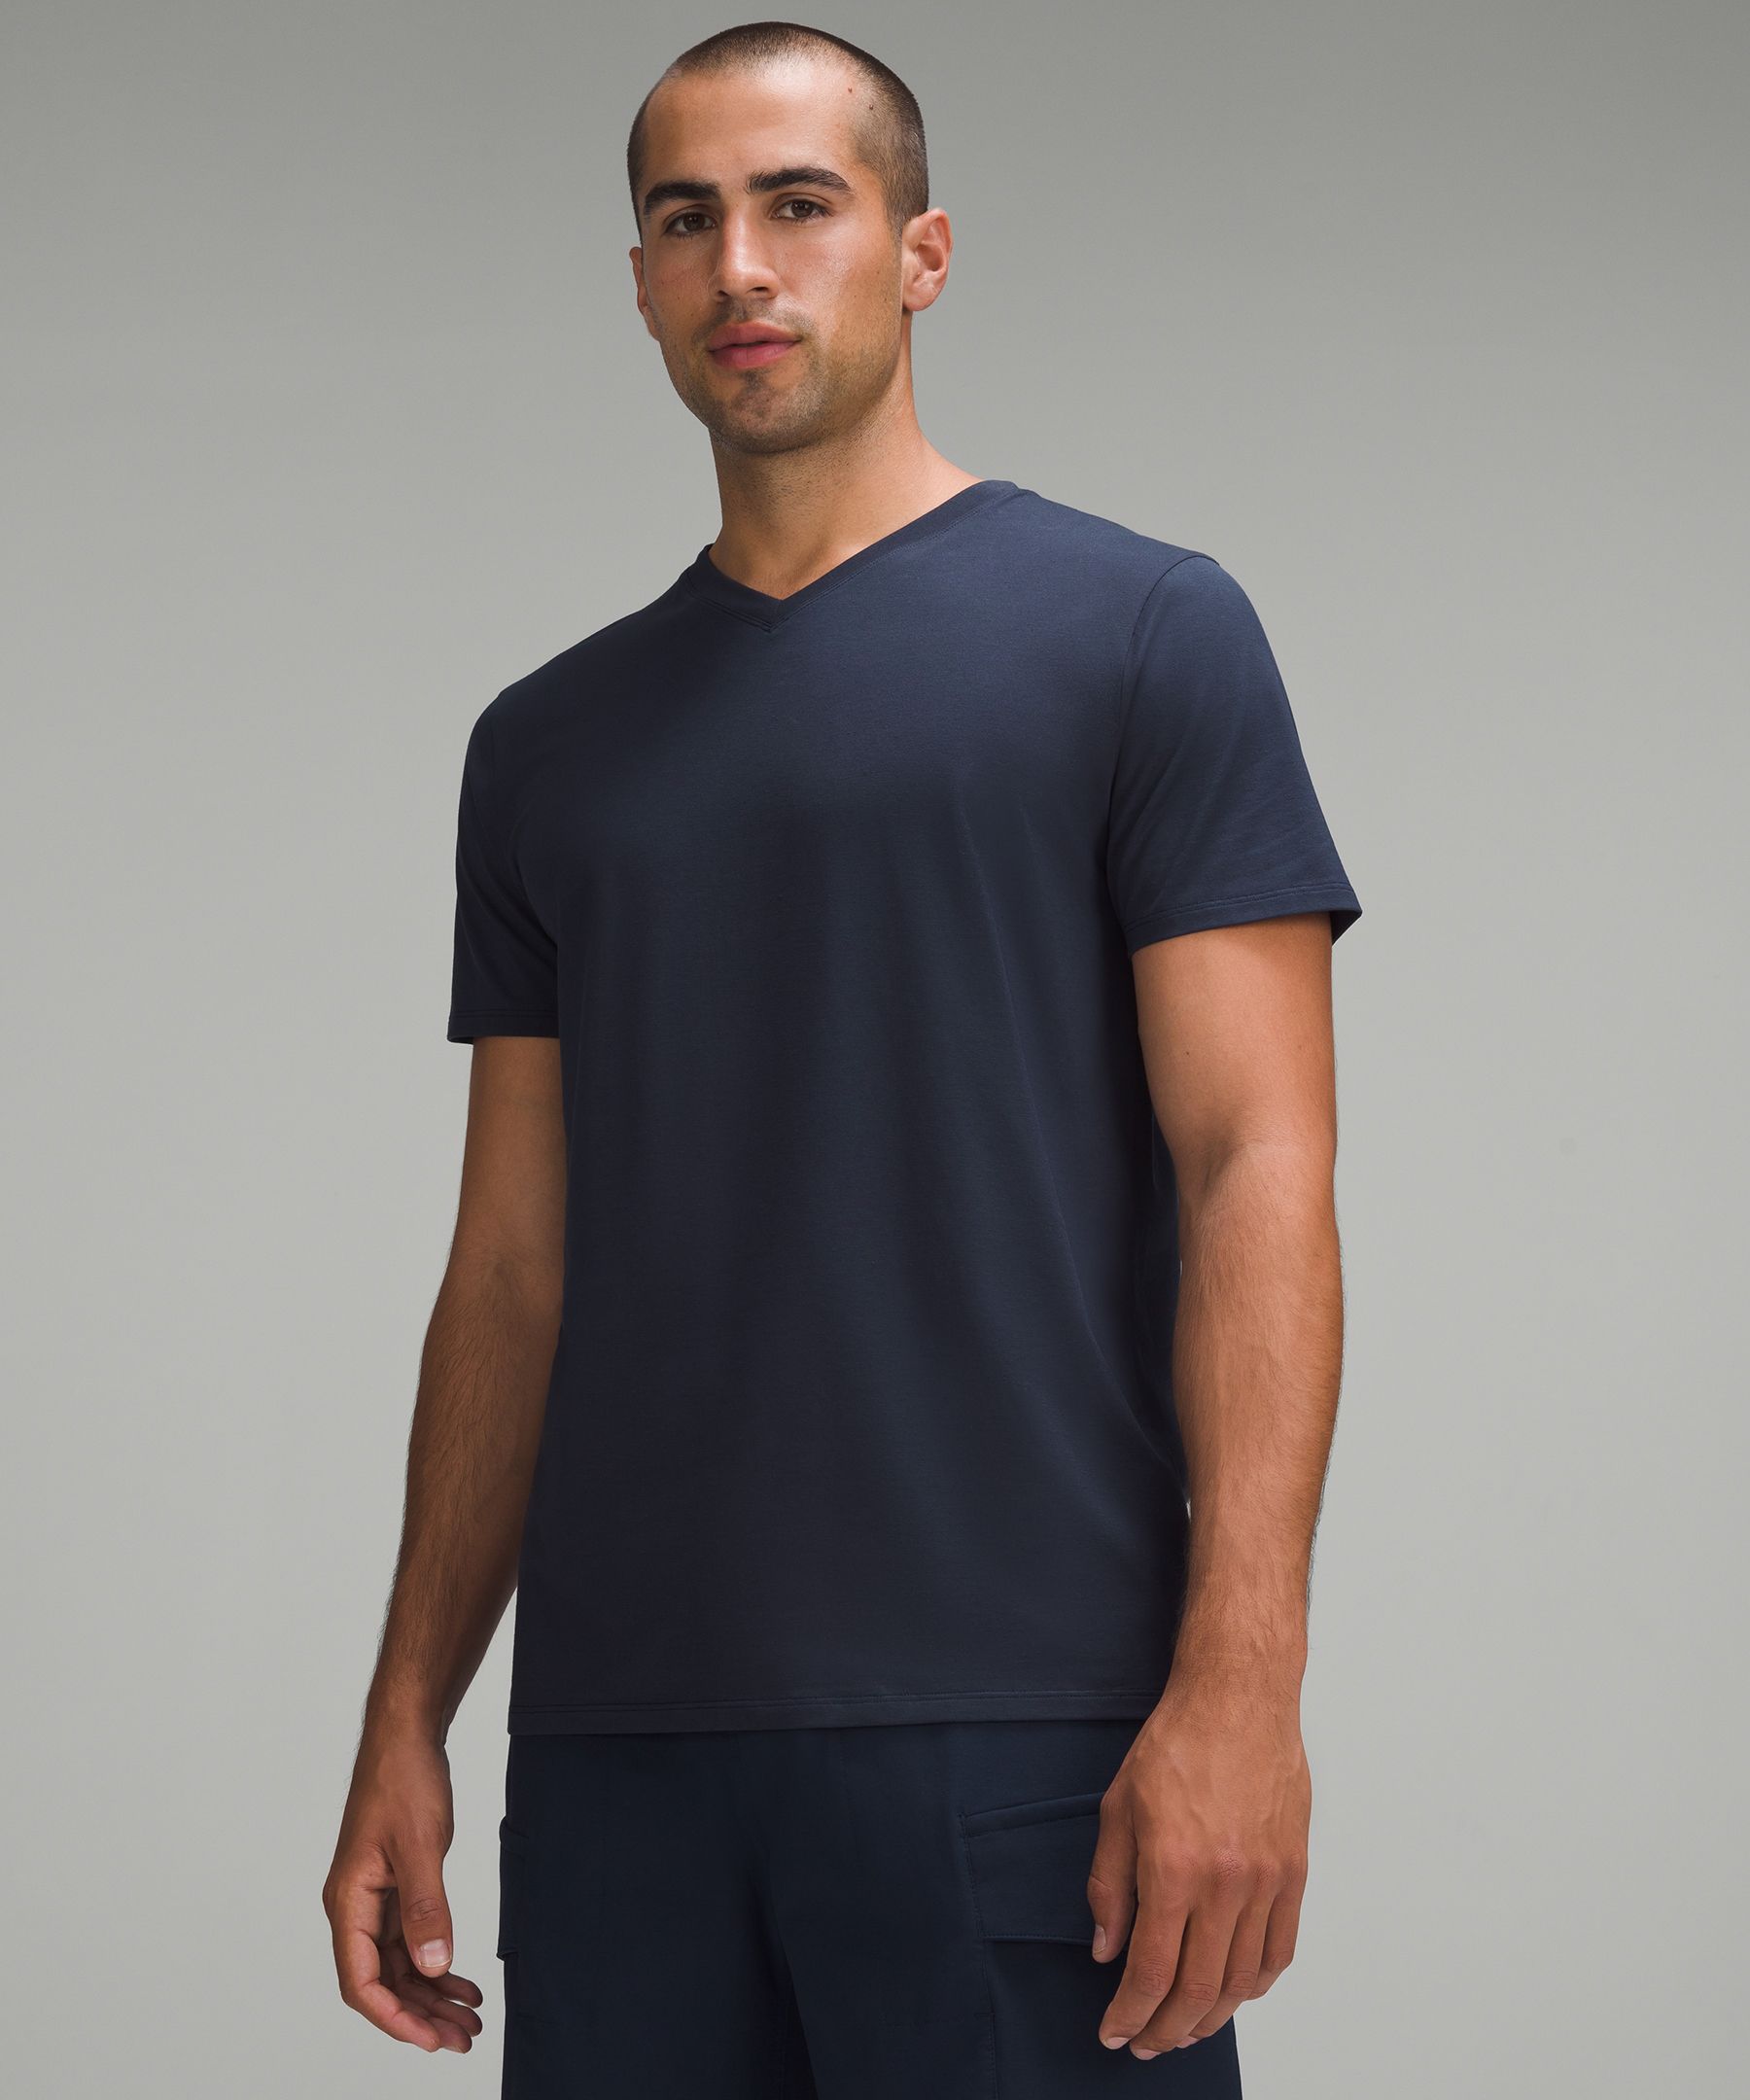 The Fundamental V-Neck T-Shirt | Men's Short Sleeve Shirts & Tee's | lululemon